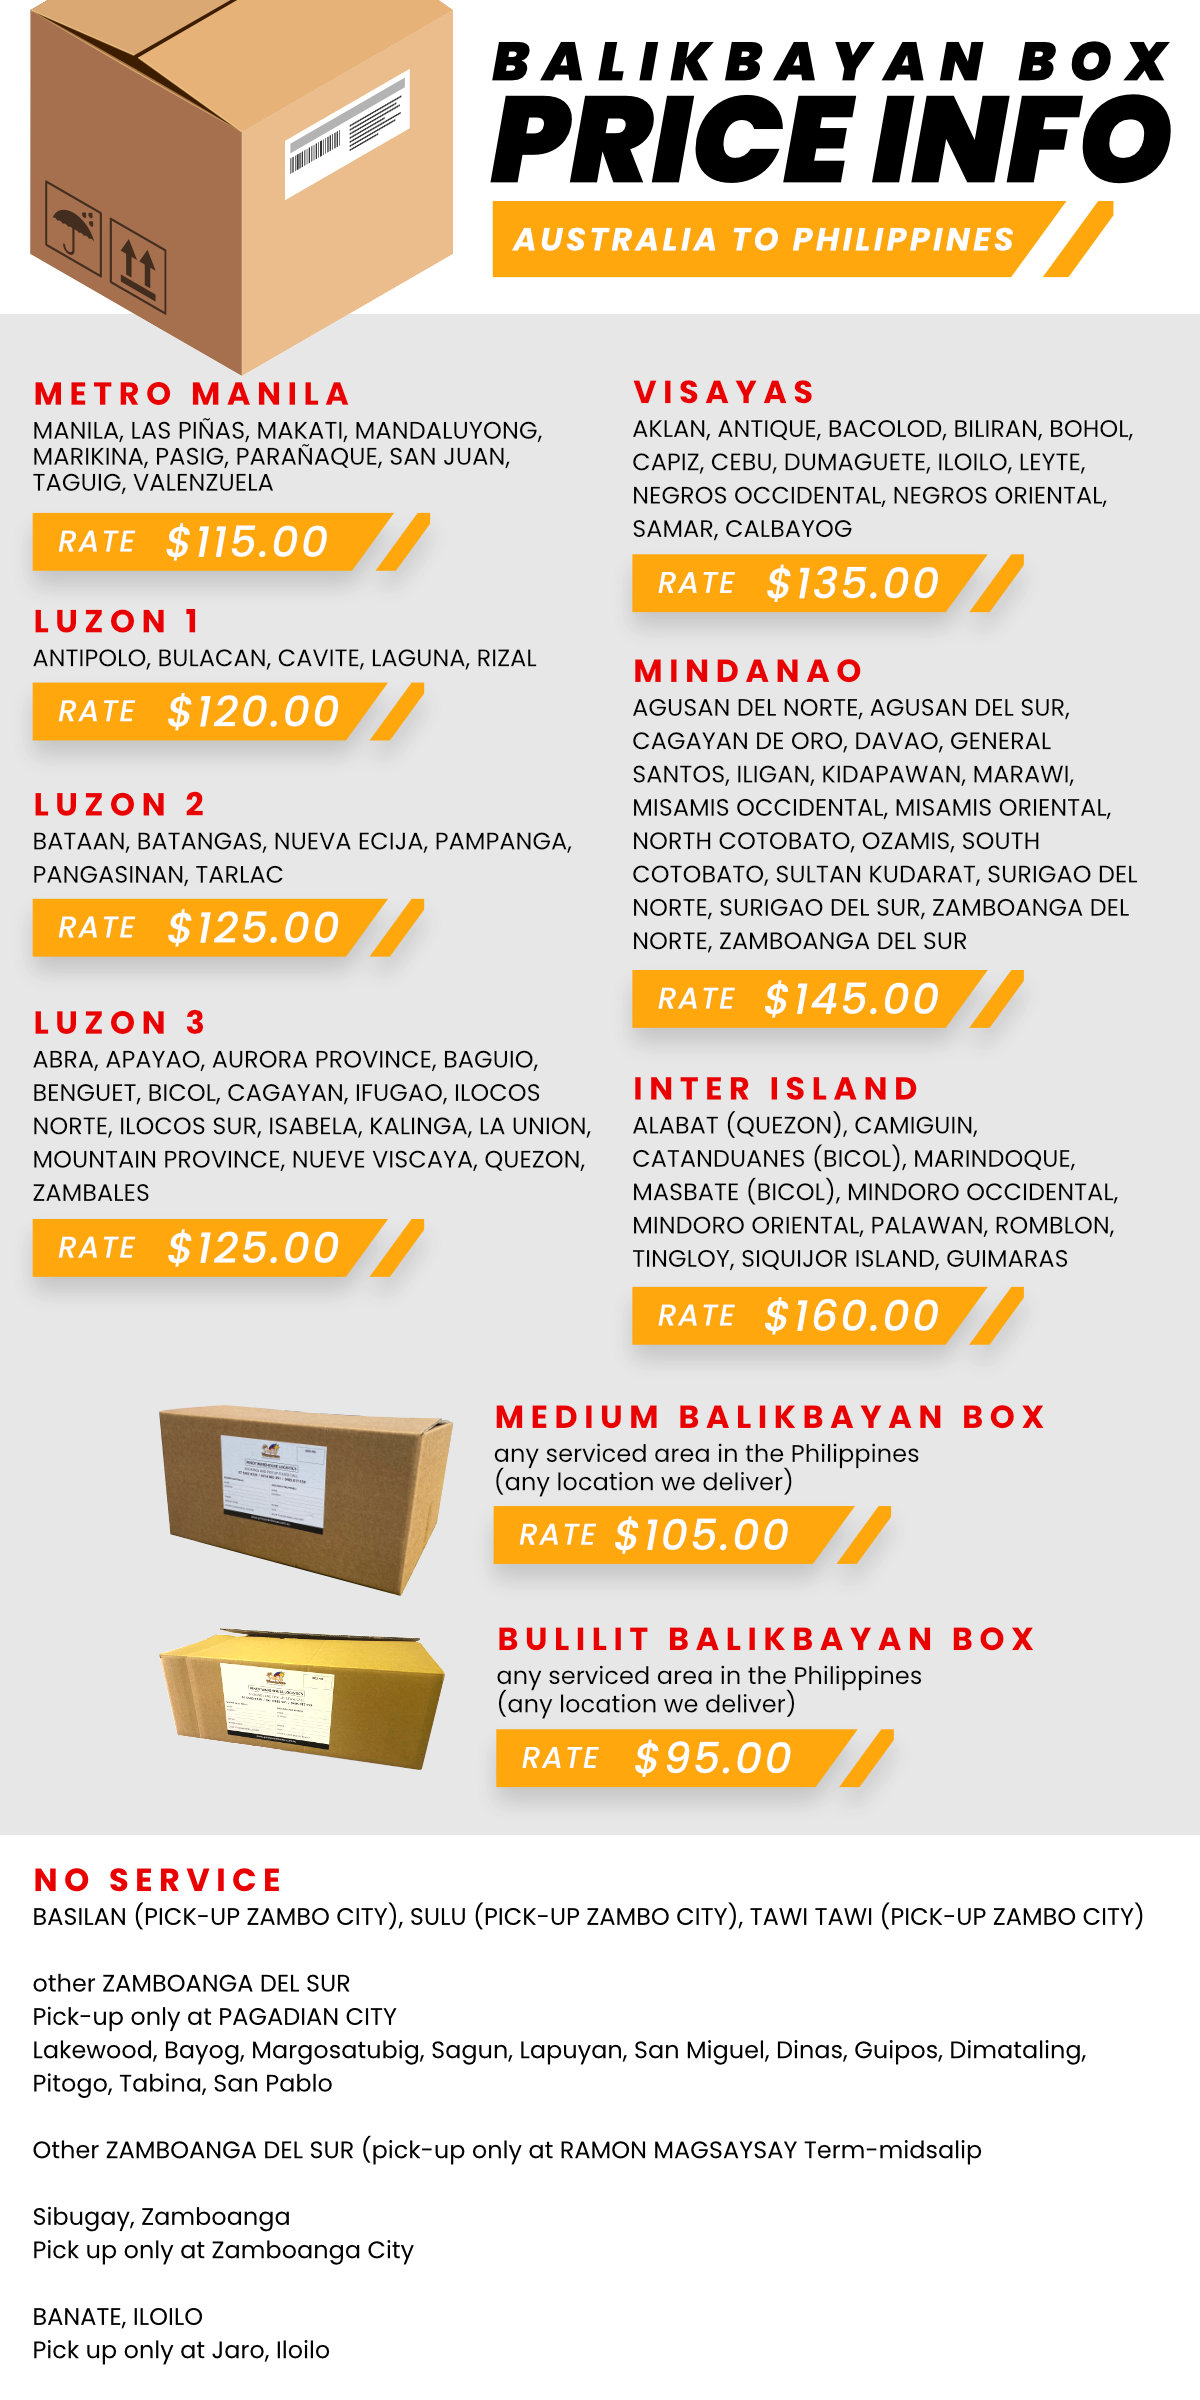 balikbayan-box-price-info-v4